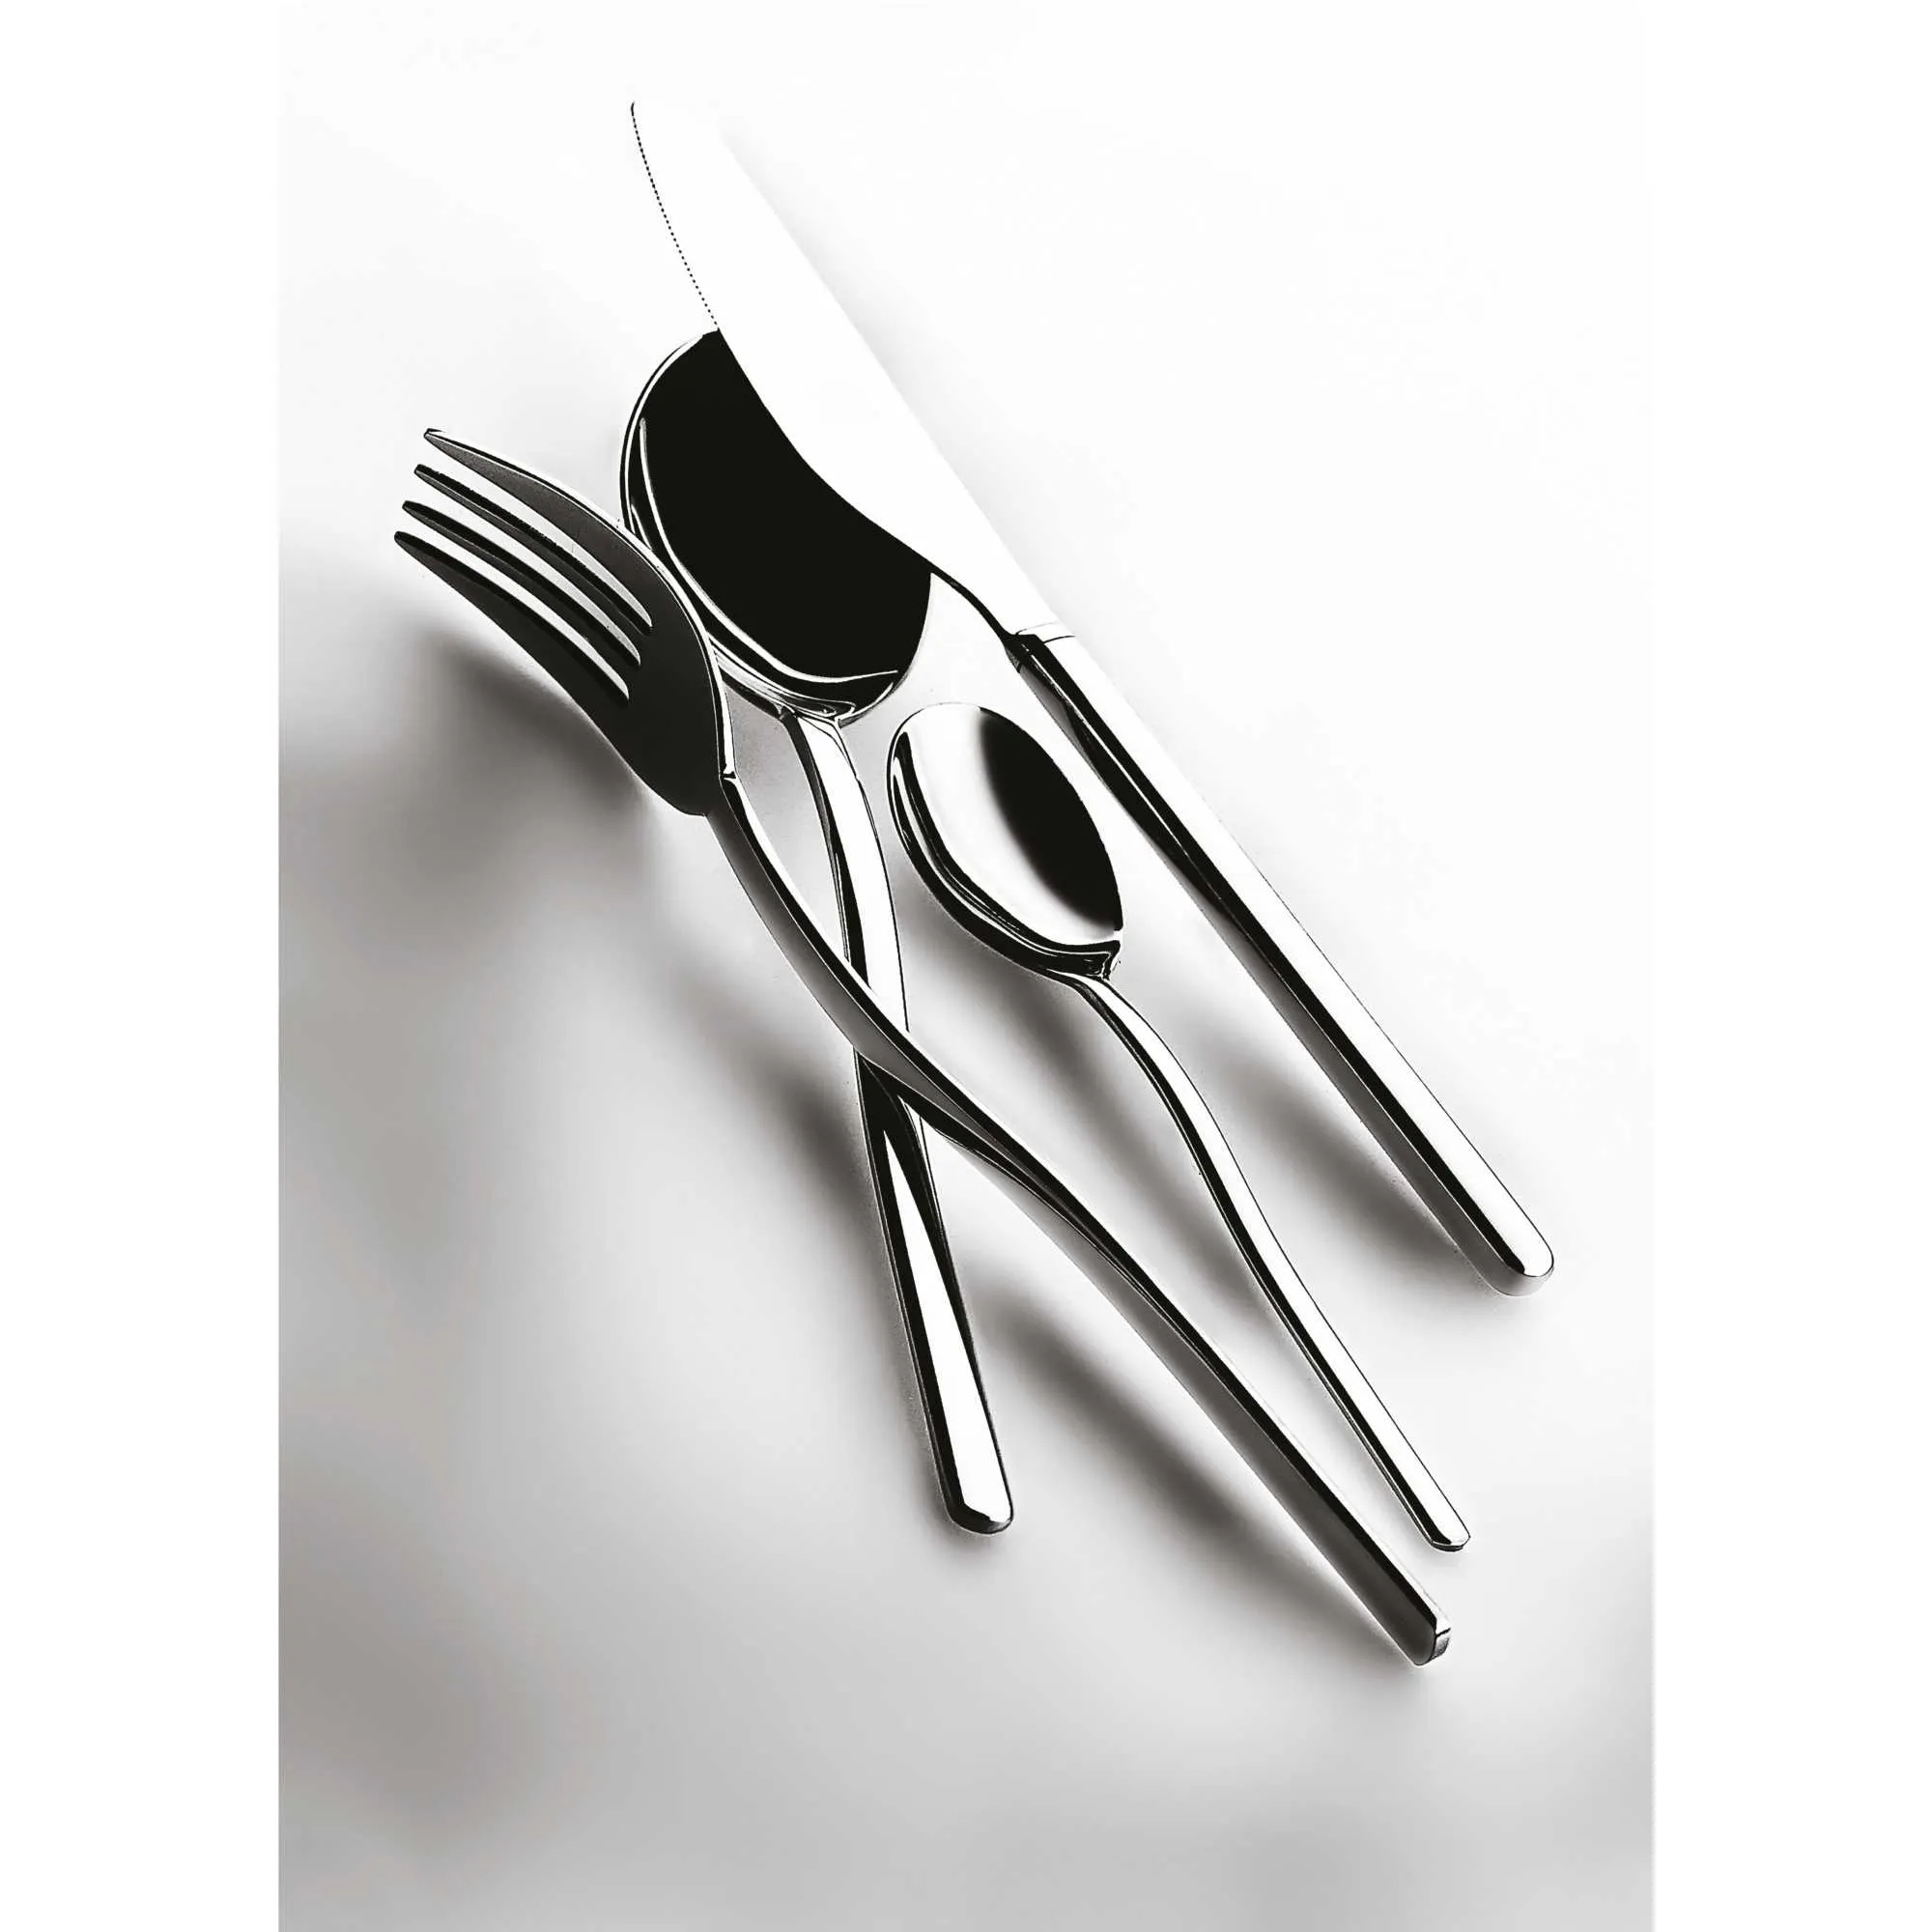 Cutlery set 87 pcs Sveva in Acciaio Inossidabile, colore Acciaio, Lavabile in lavastoviglie